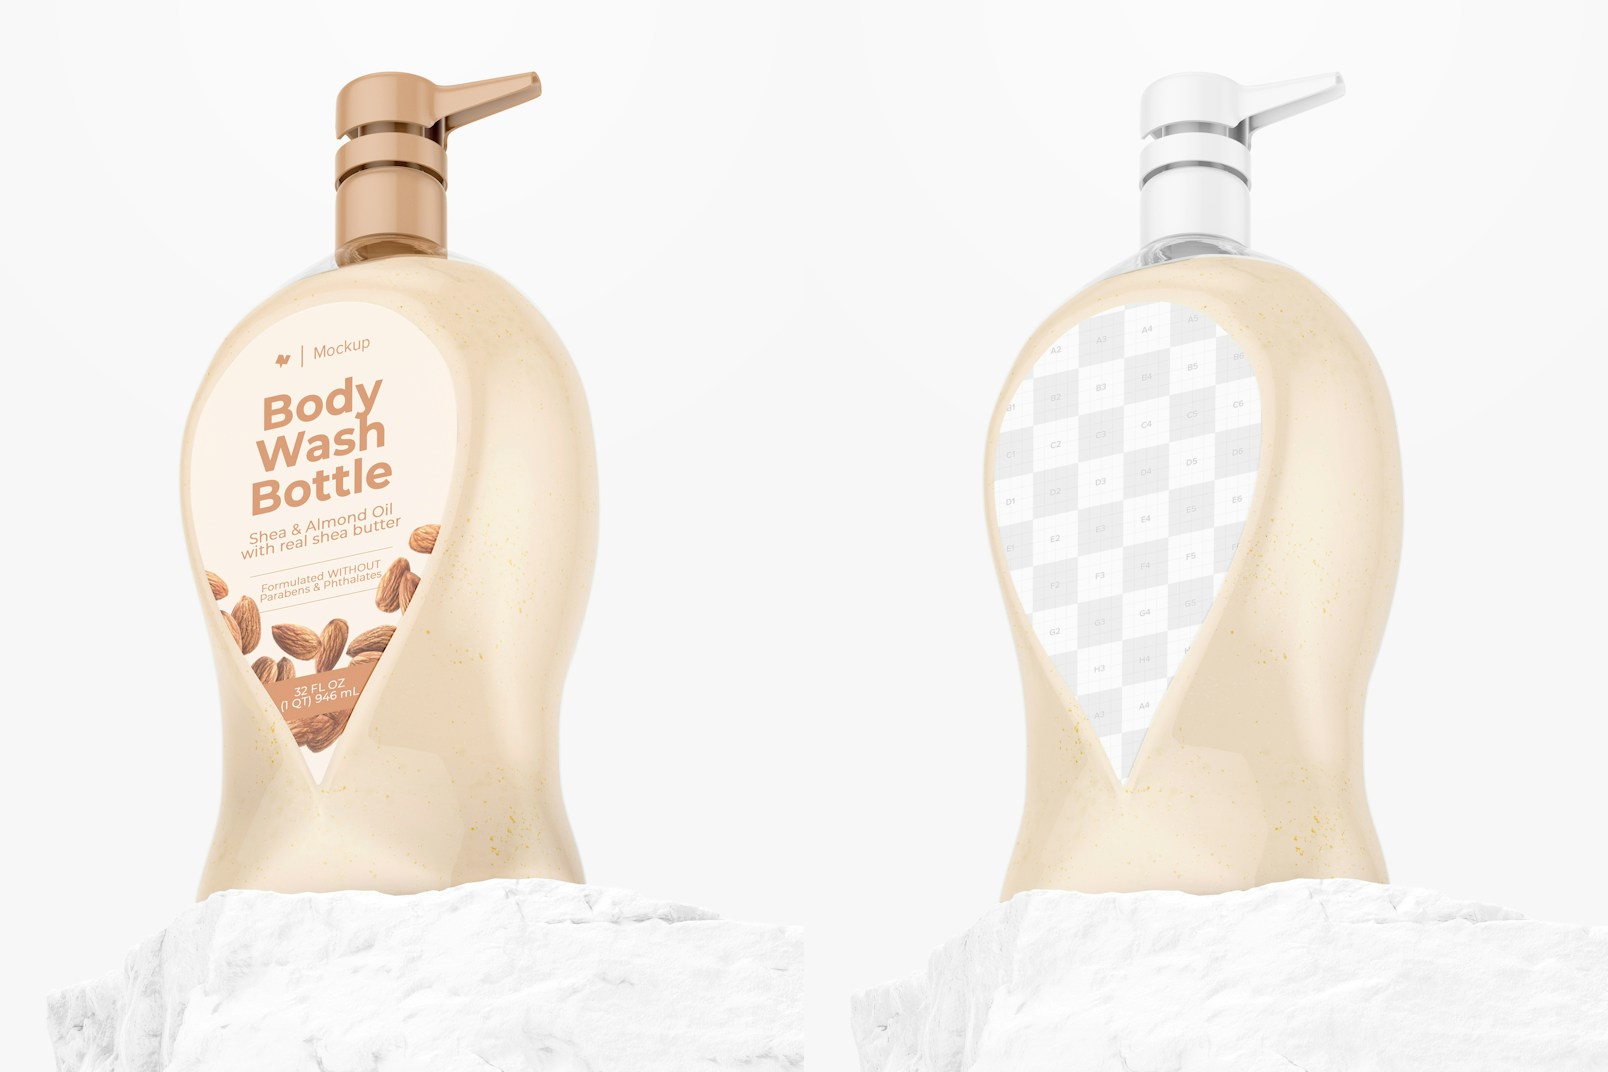 32 oz Body Wash Bottle Mockup, Low Angle View